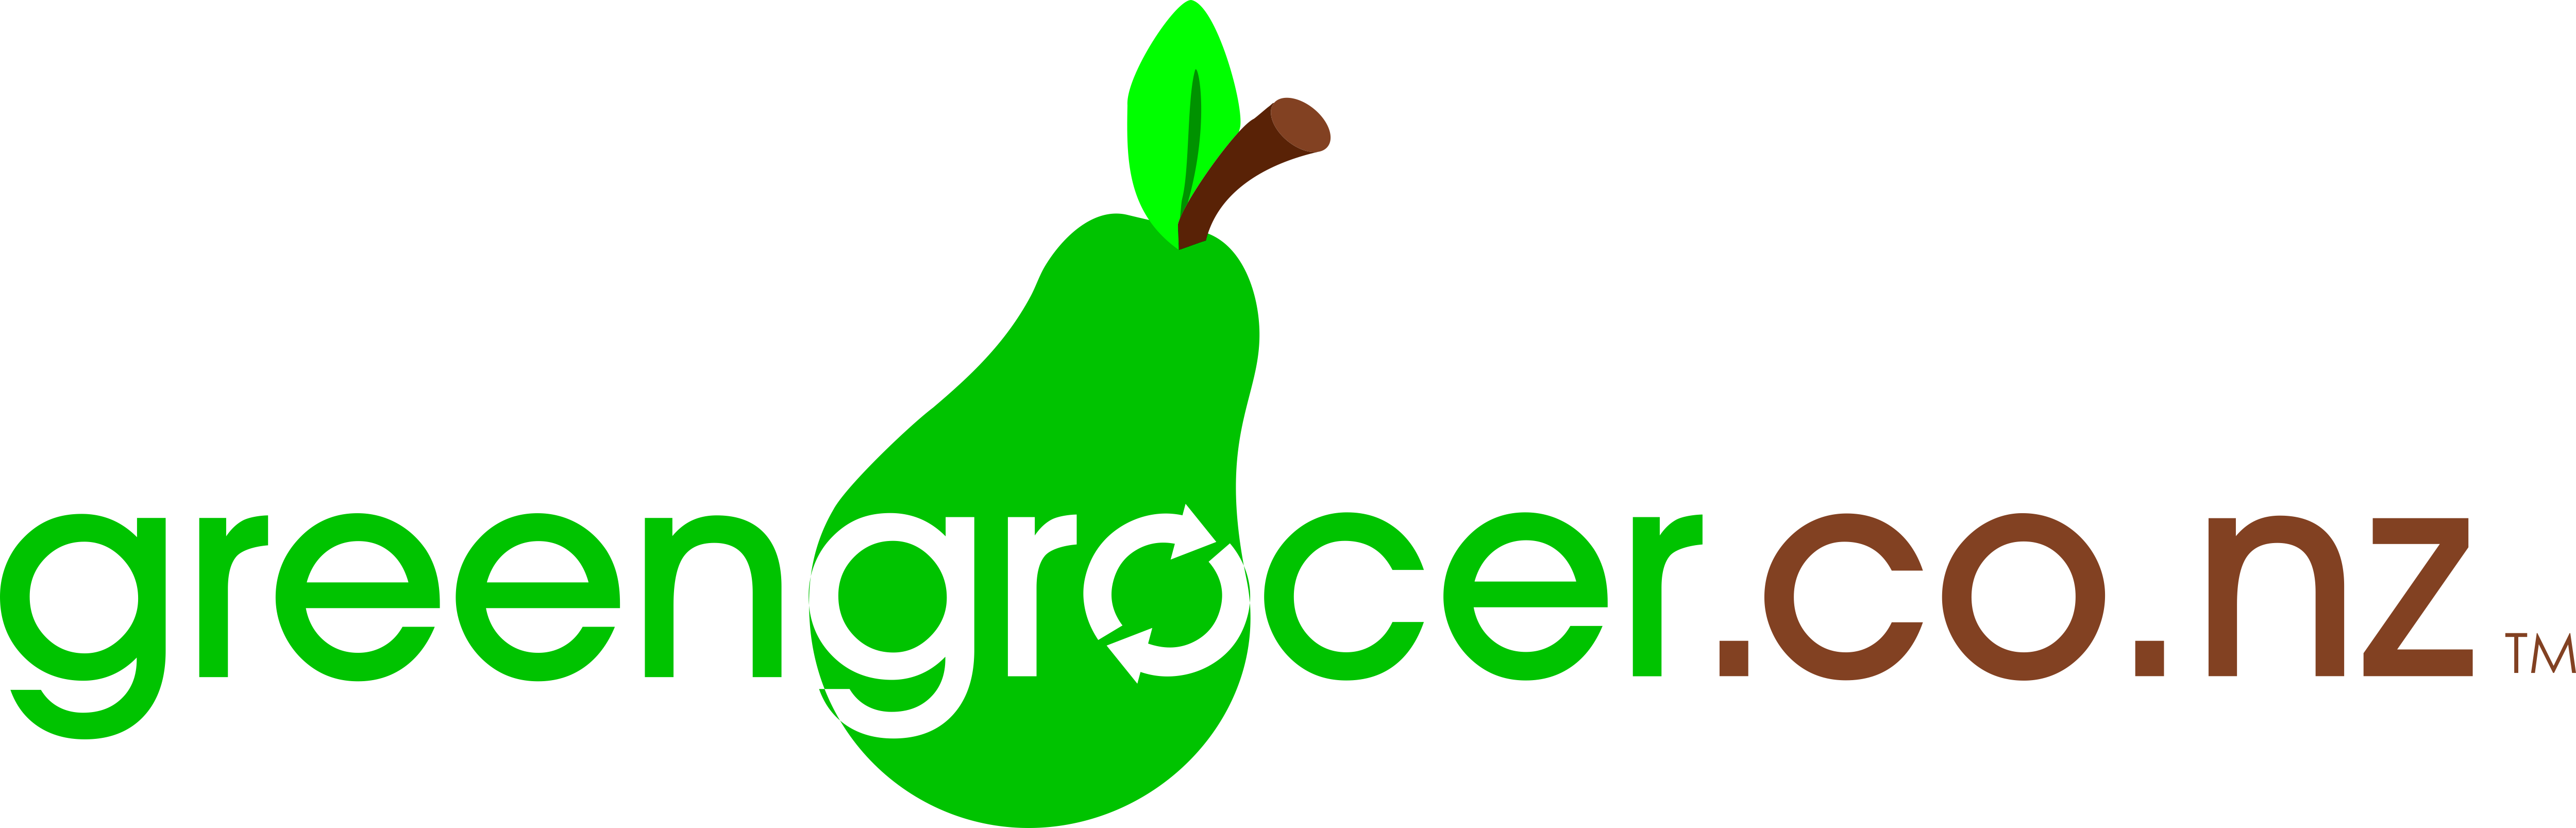 greengrocer.co.nz